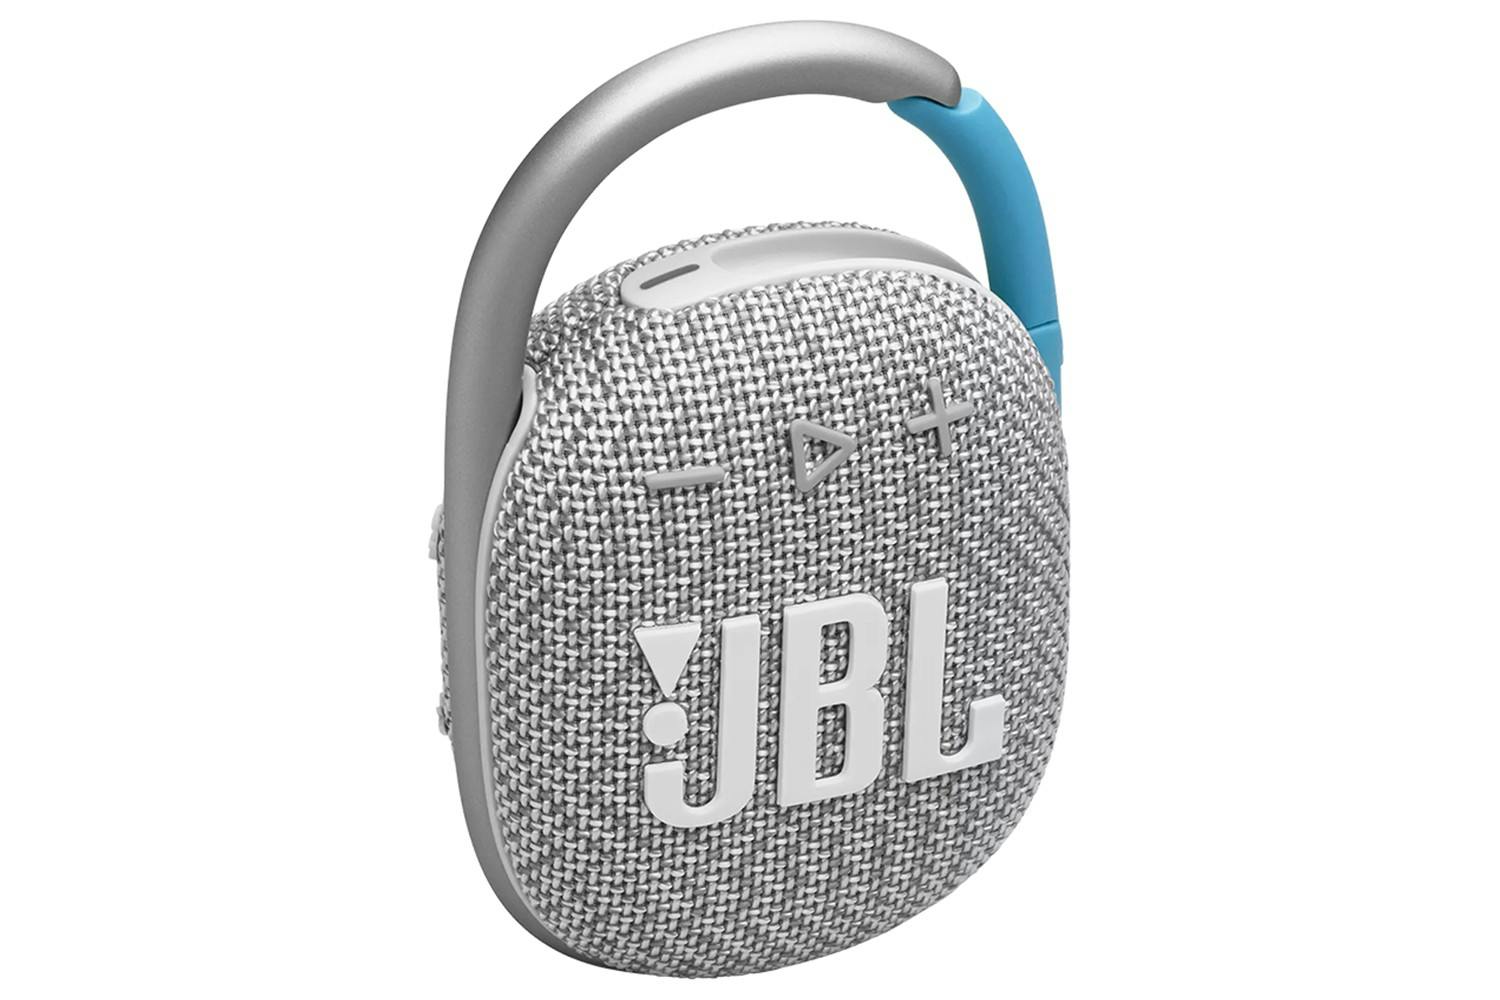 JBL's Clip 4 Portable Speaker Is on Sale at